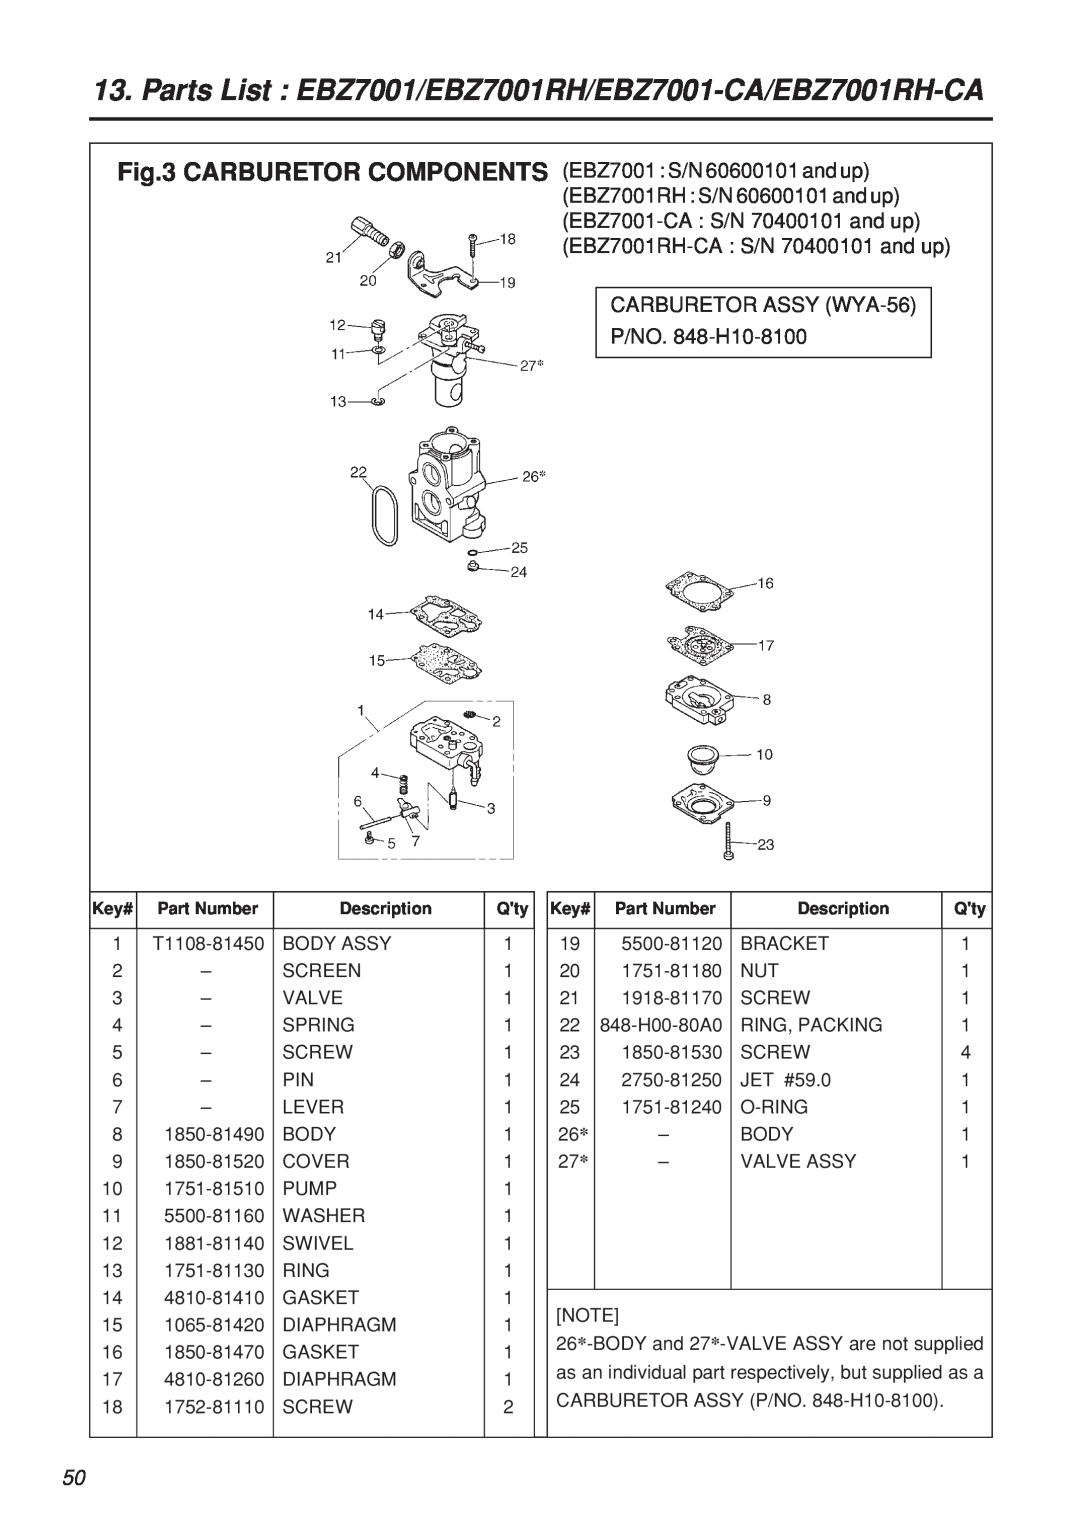 Zenoah manual CARBURETOR ASSY WYA-56 P/NO. 848-H10-8100, Parts List EBZ7001/EBZ7001RH/EBZ7001-CA/EBZ7001RH-CA 